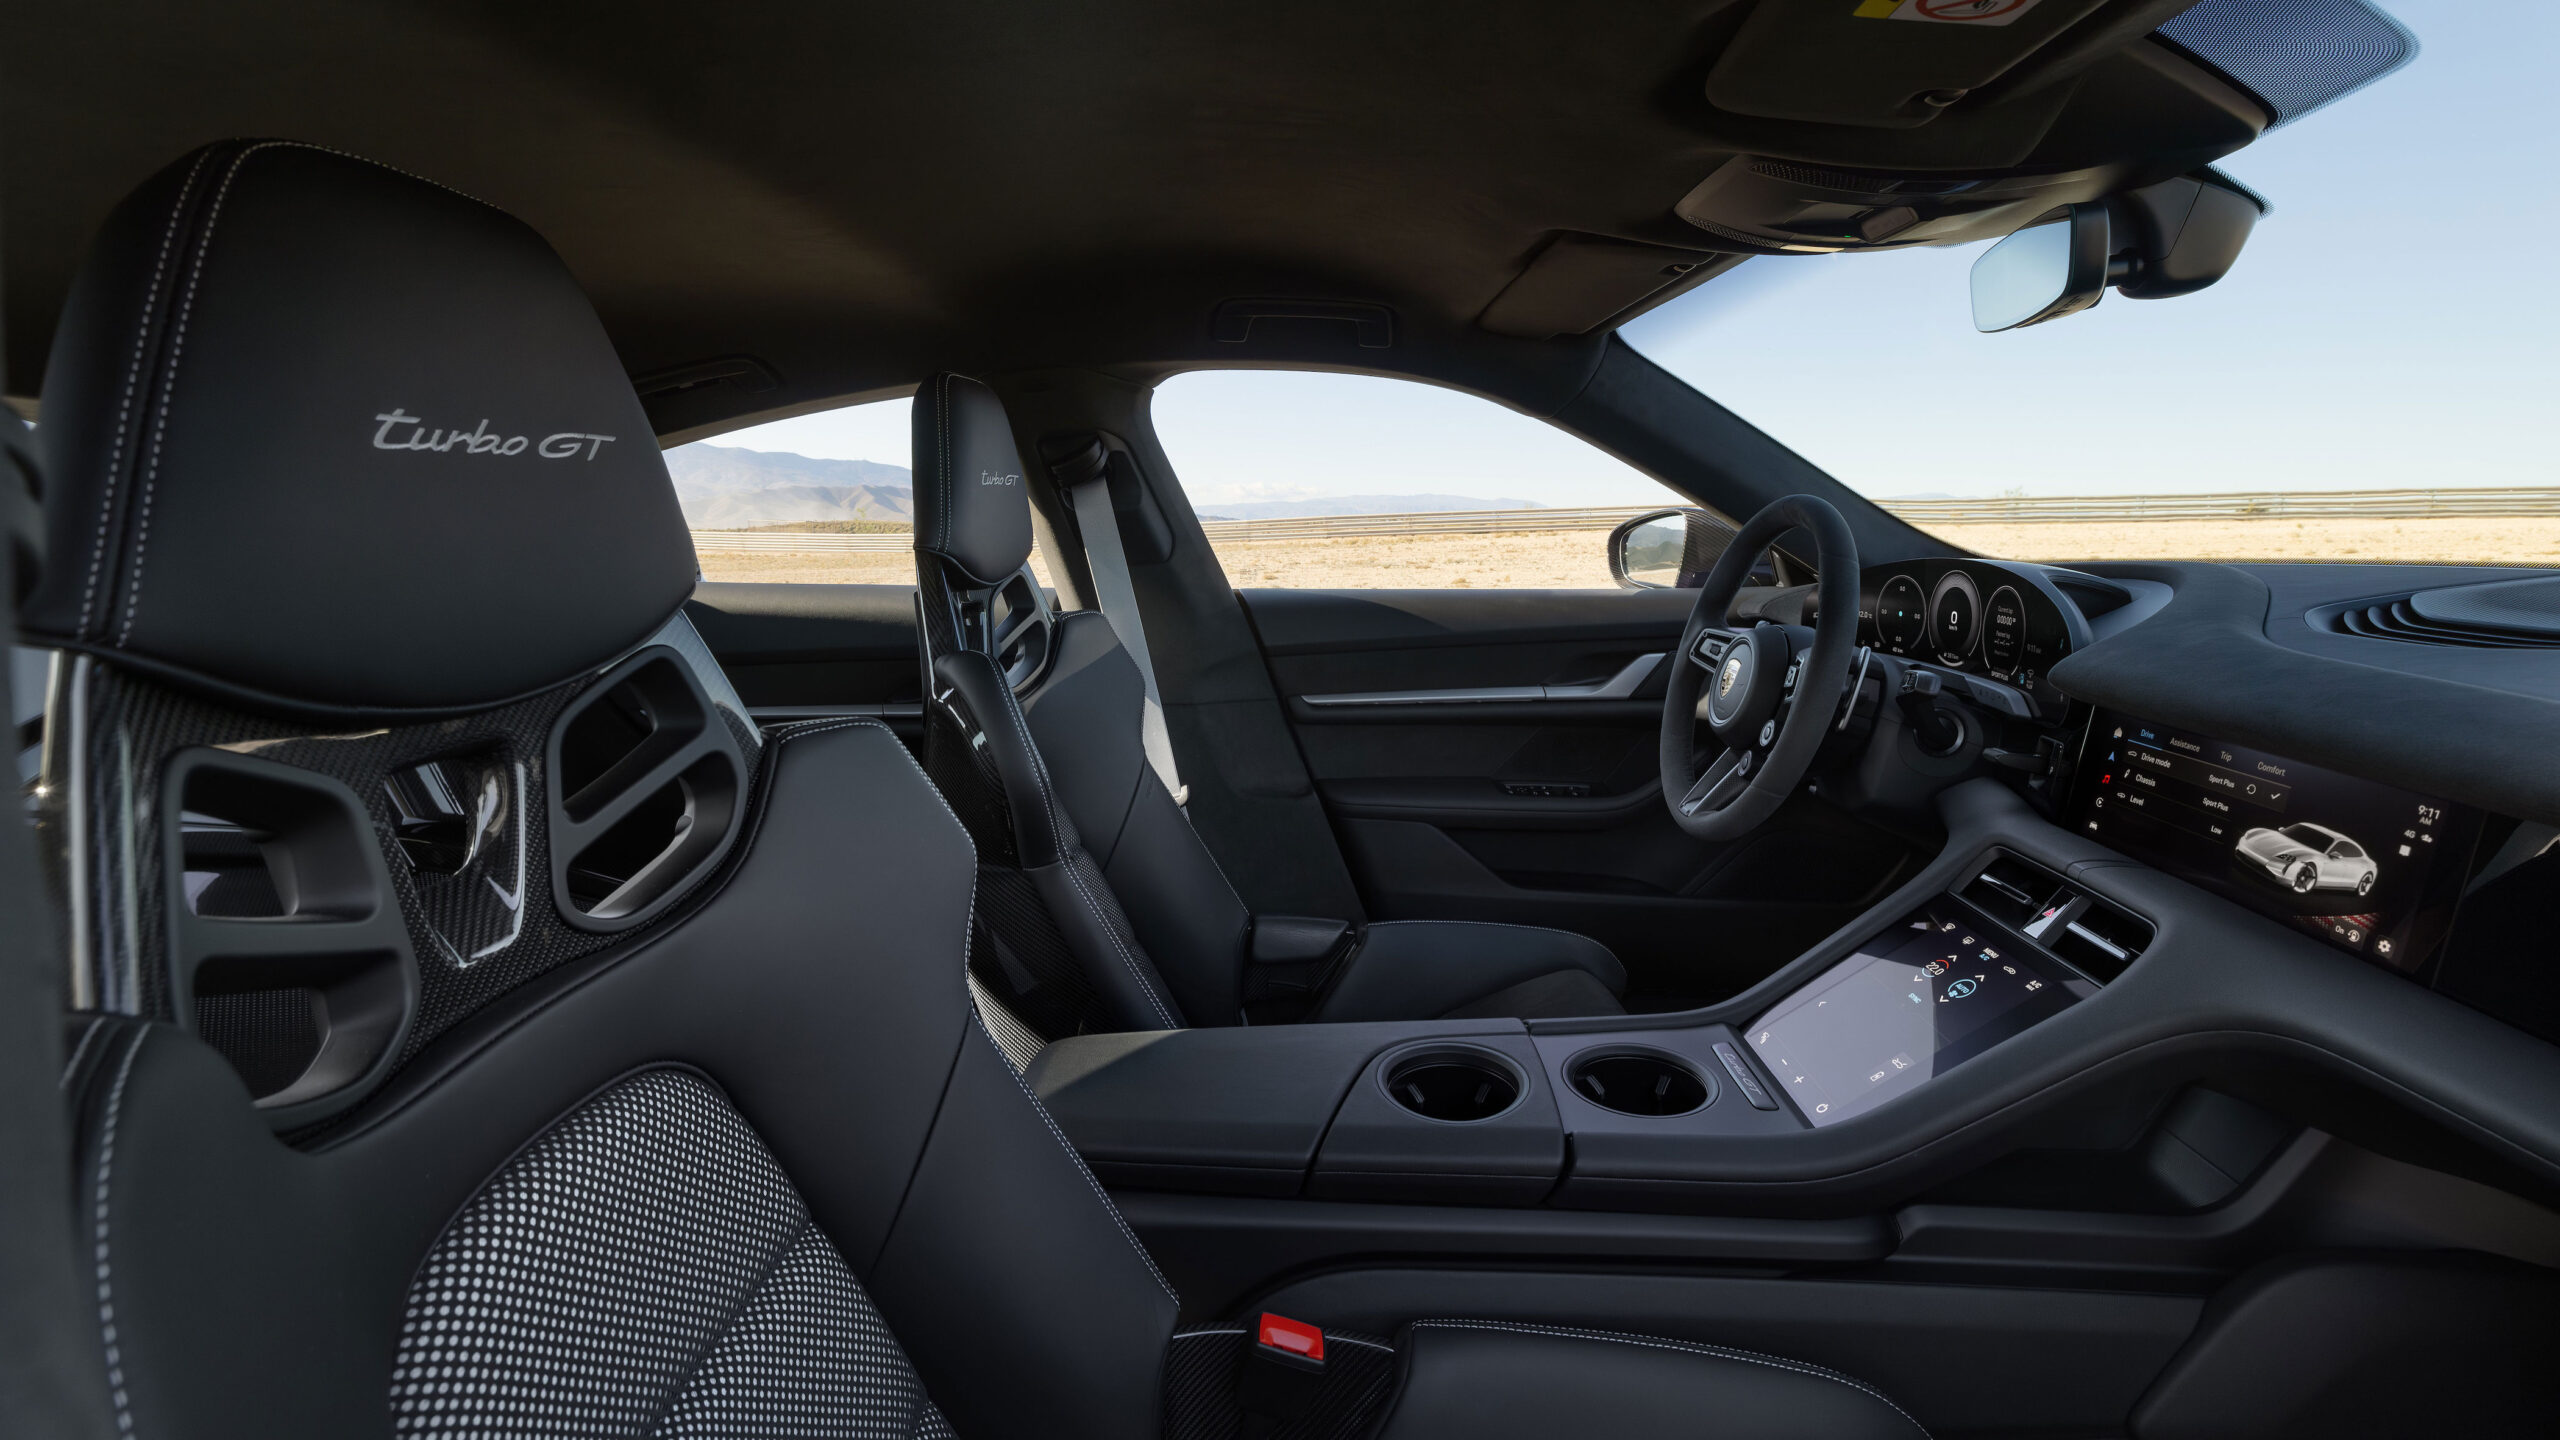 2025 Porsche Taycan Turbo GT interior seats and front cabin area through passenger's door